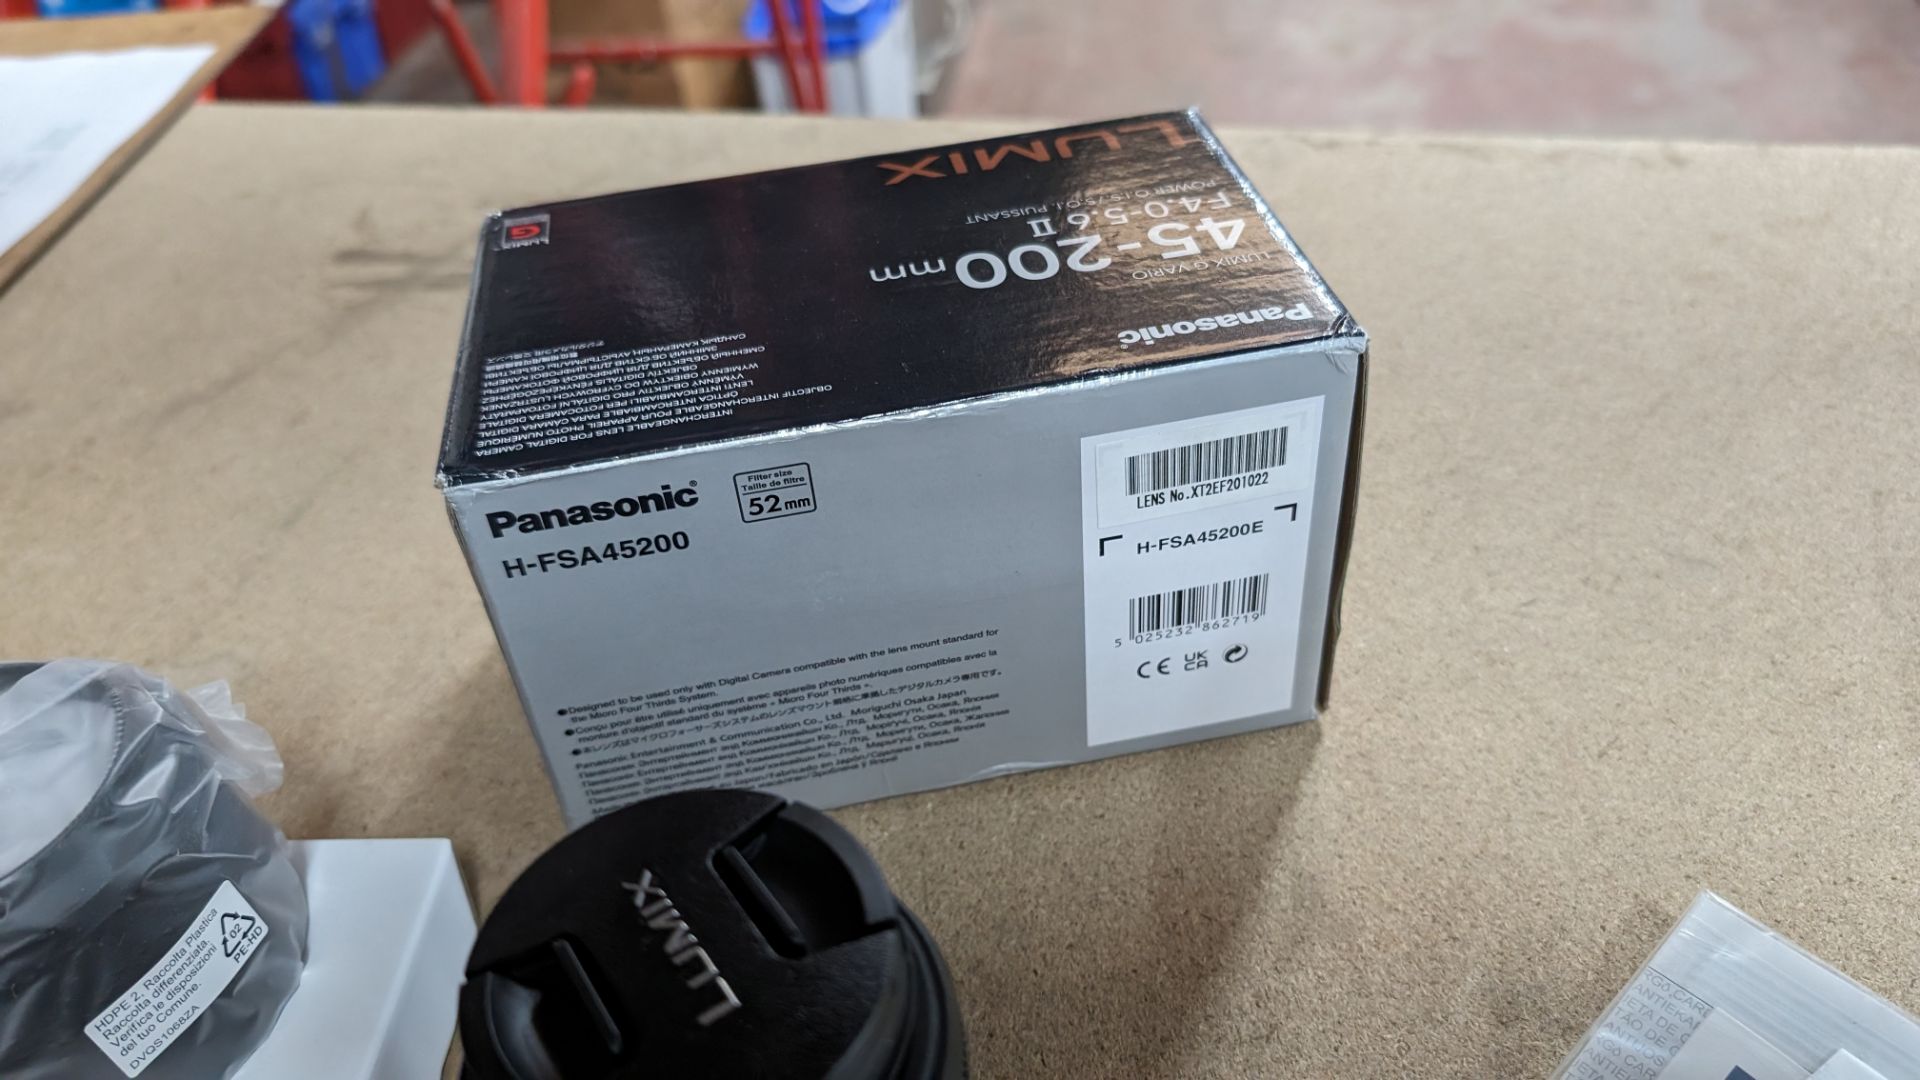 Panasonic Lumix G Vario 45-200mm lens, model H-FSA45200, f4.0-5.6 II - Image 10 of 10